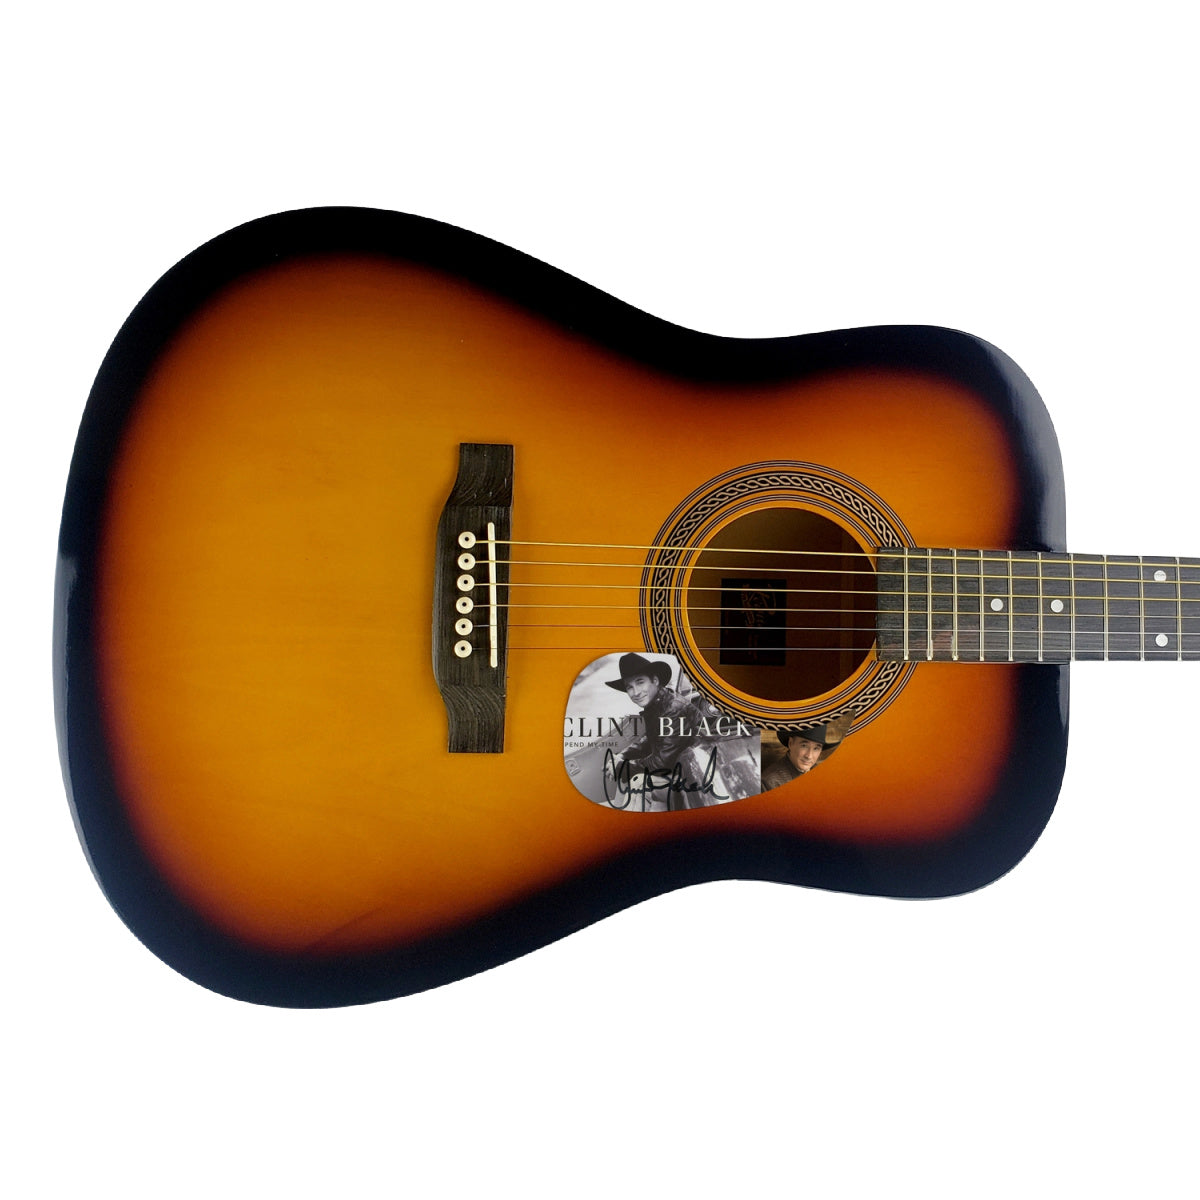 Clint Black Autographed Signed Sunburst Acoustic Guitar Country Music ACOA